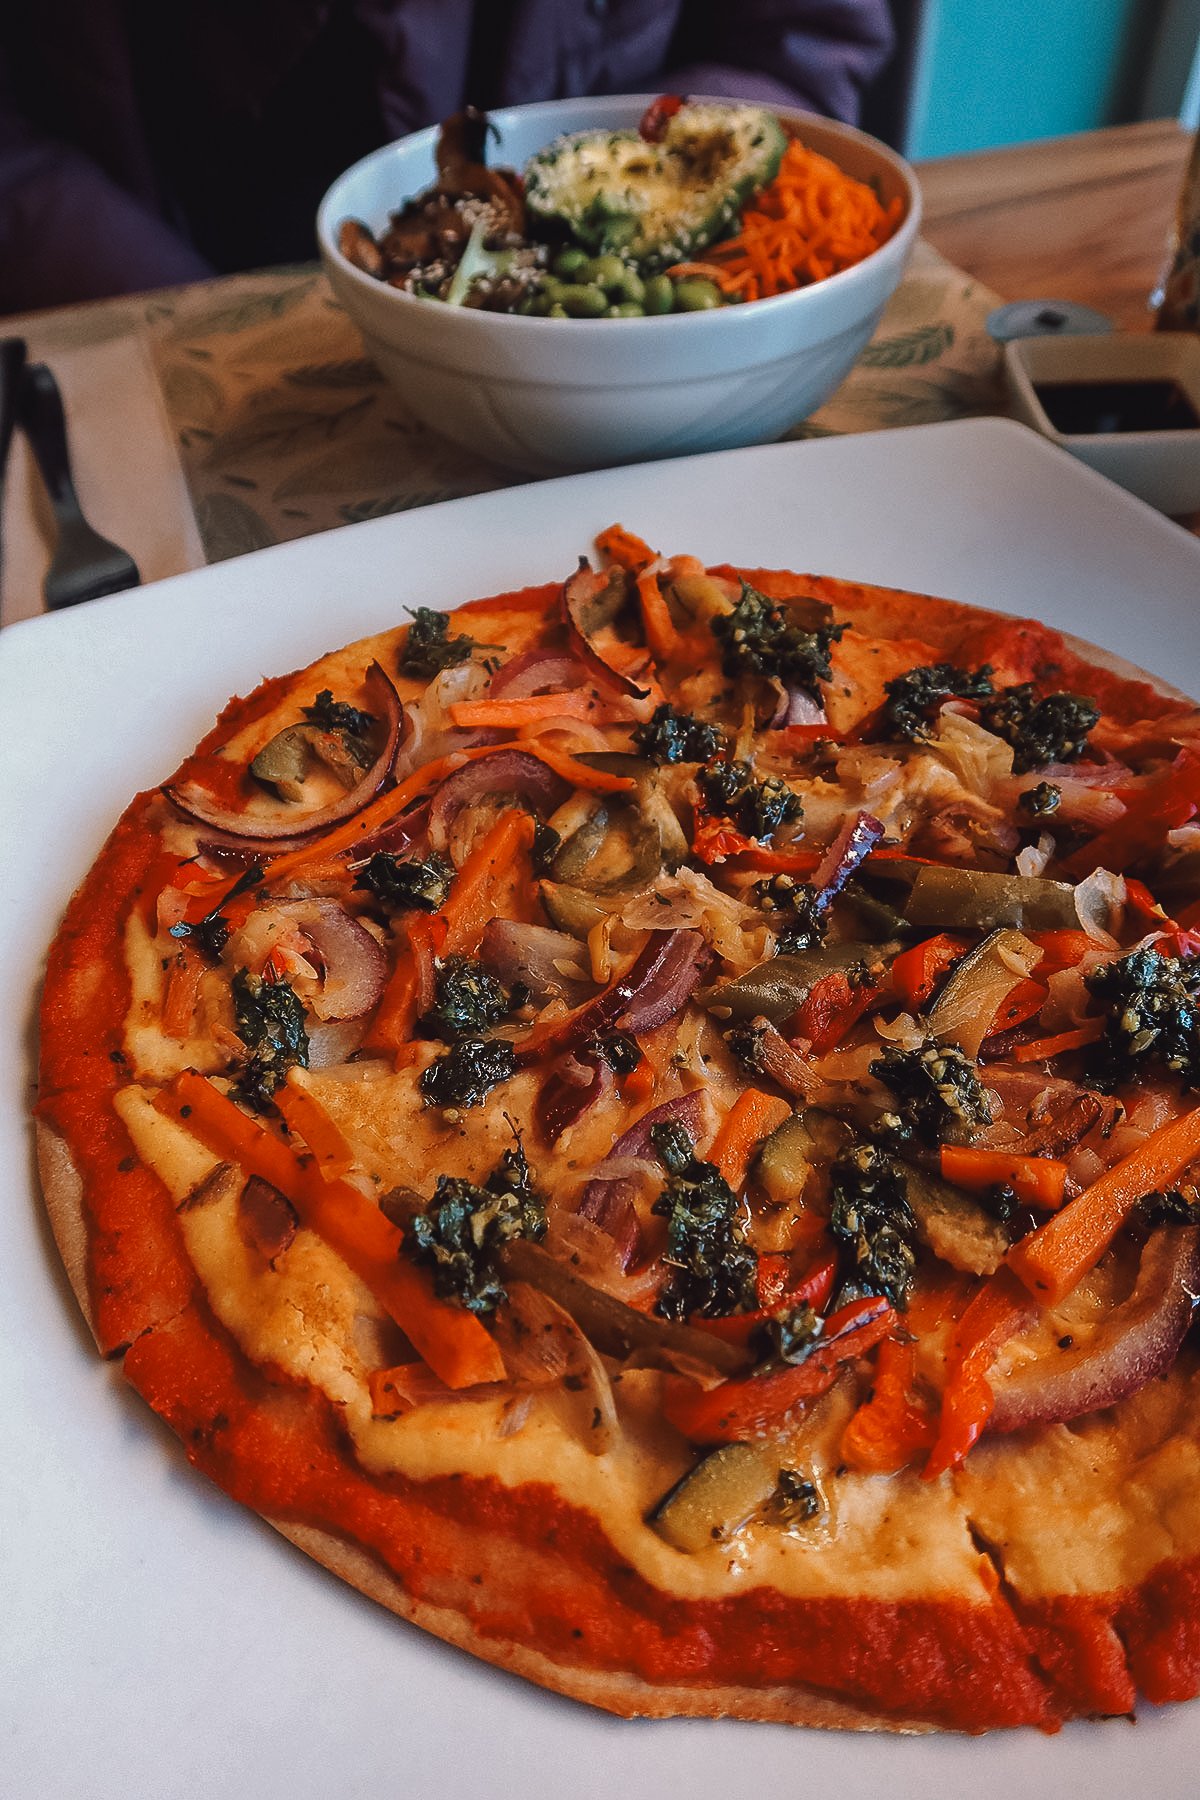 Vegan pizza at a restaurant in Malaga